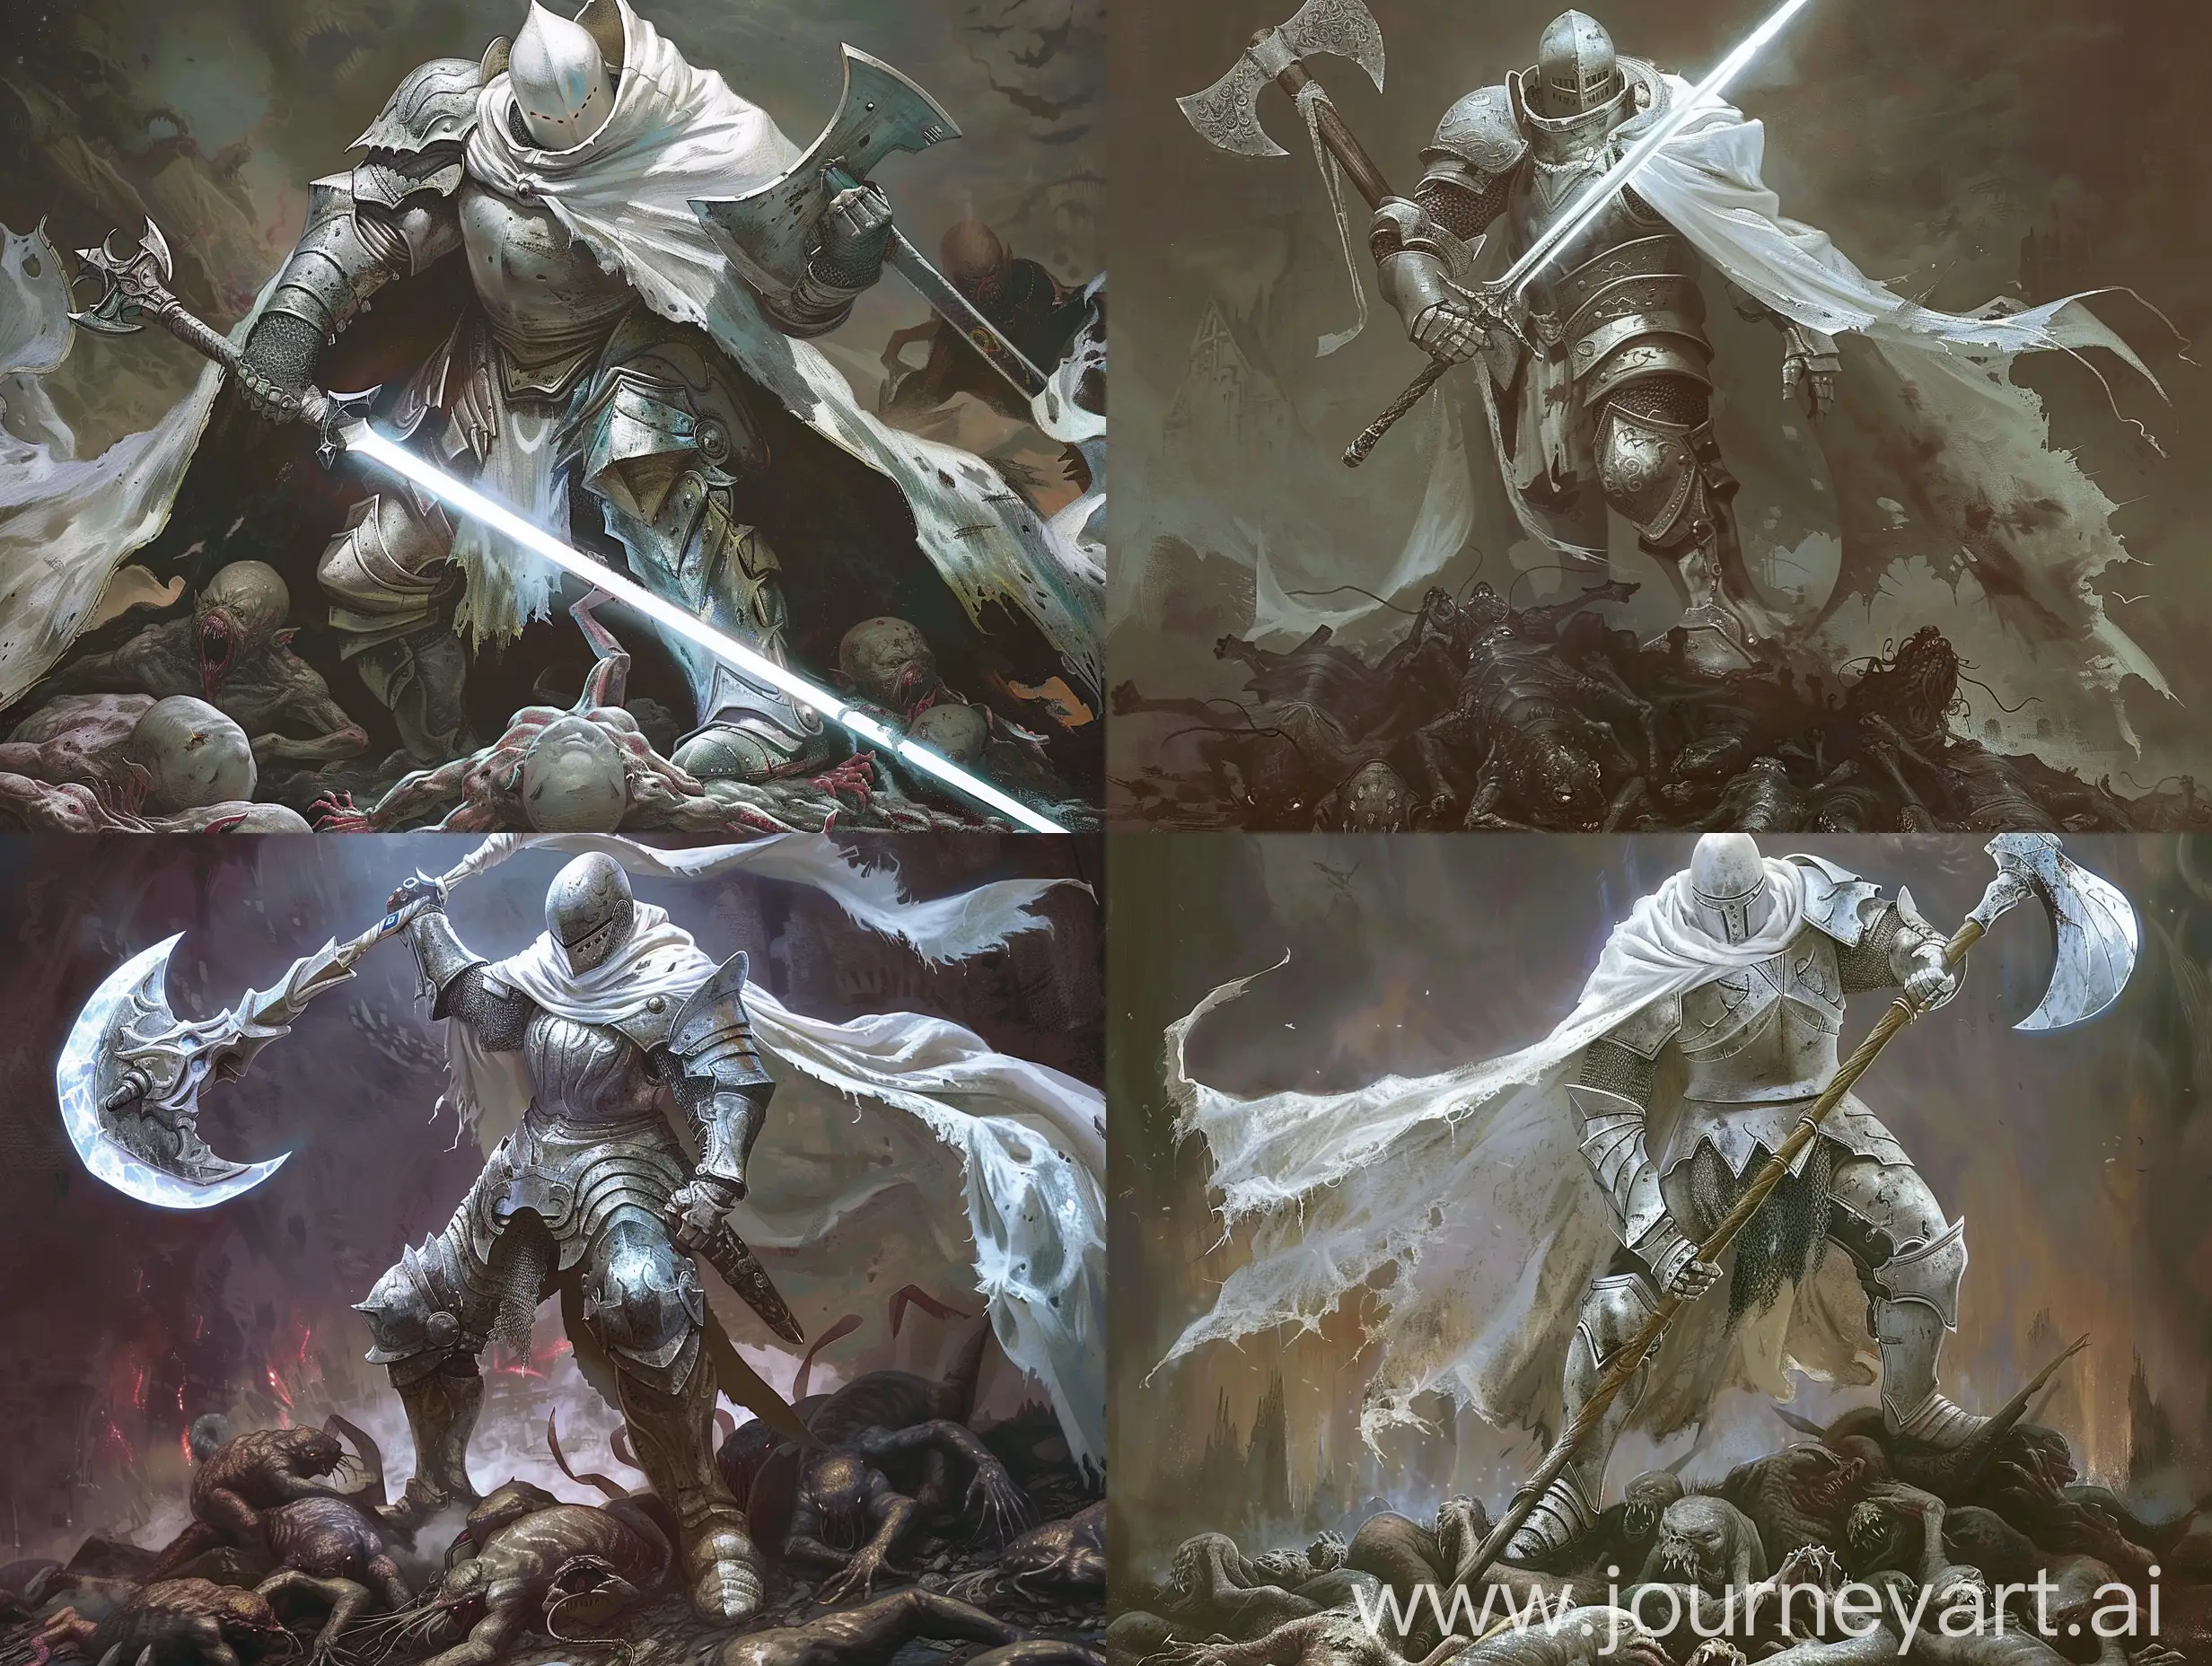 Valiant-White-Knight-Defends-Against-Hellish-Horde